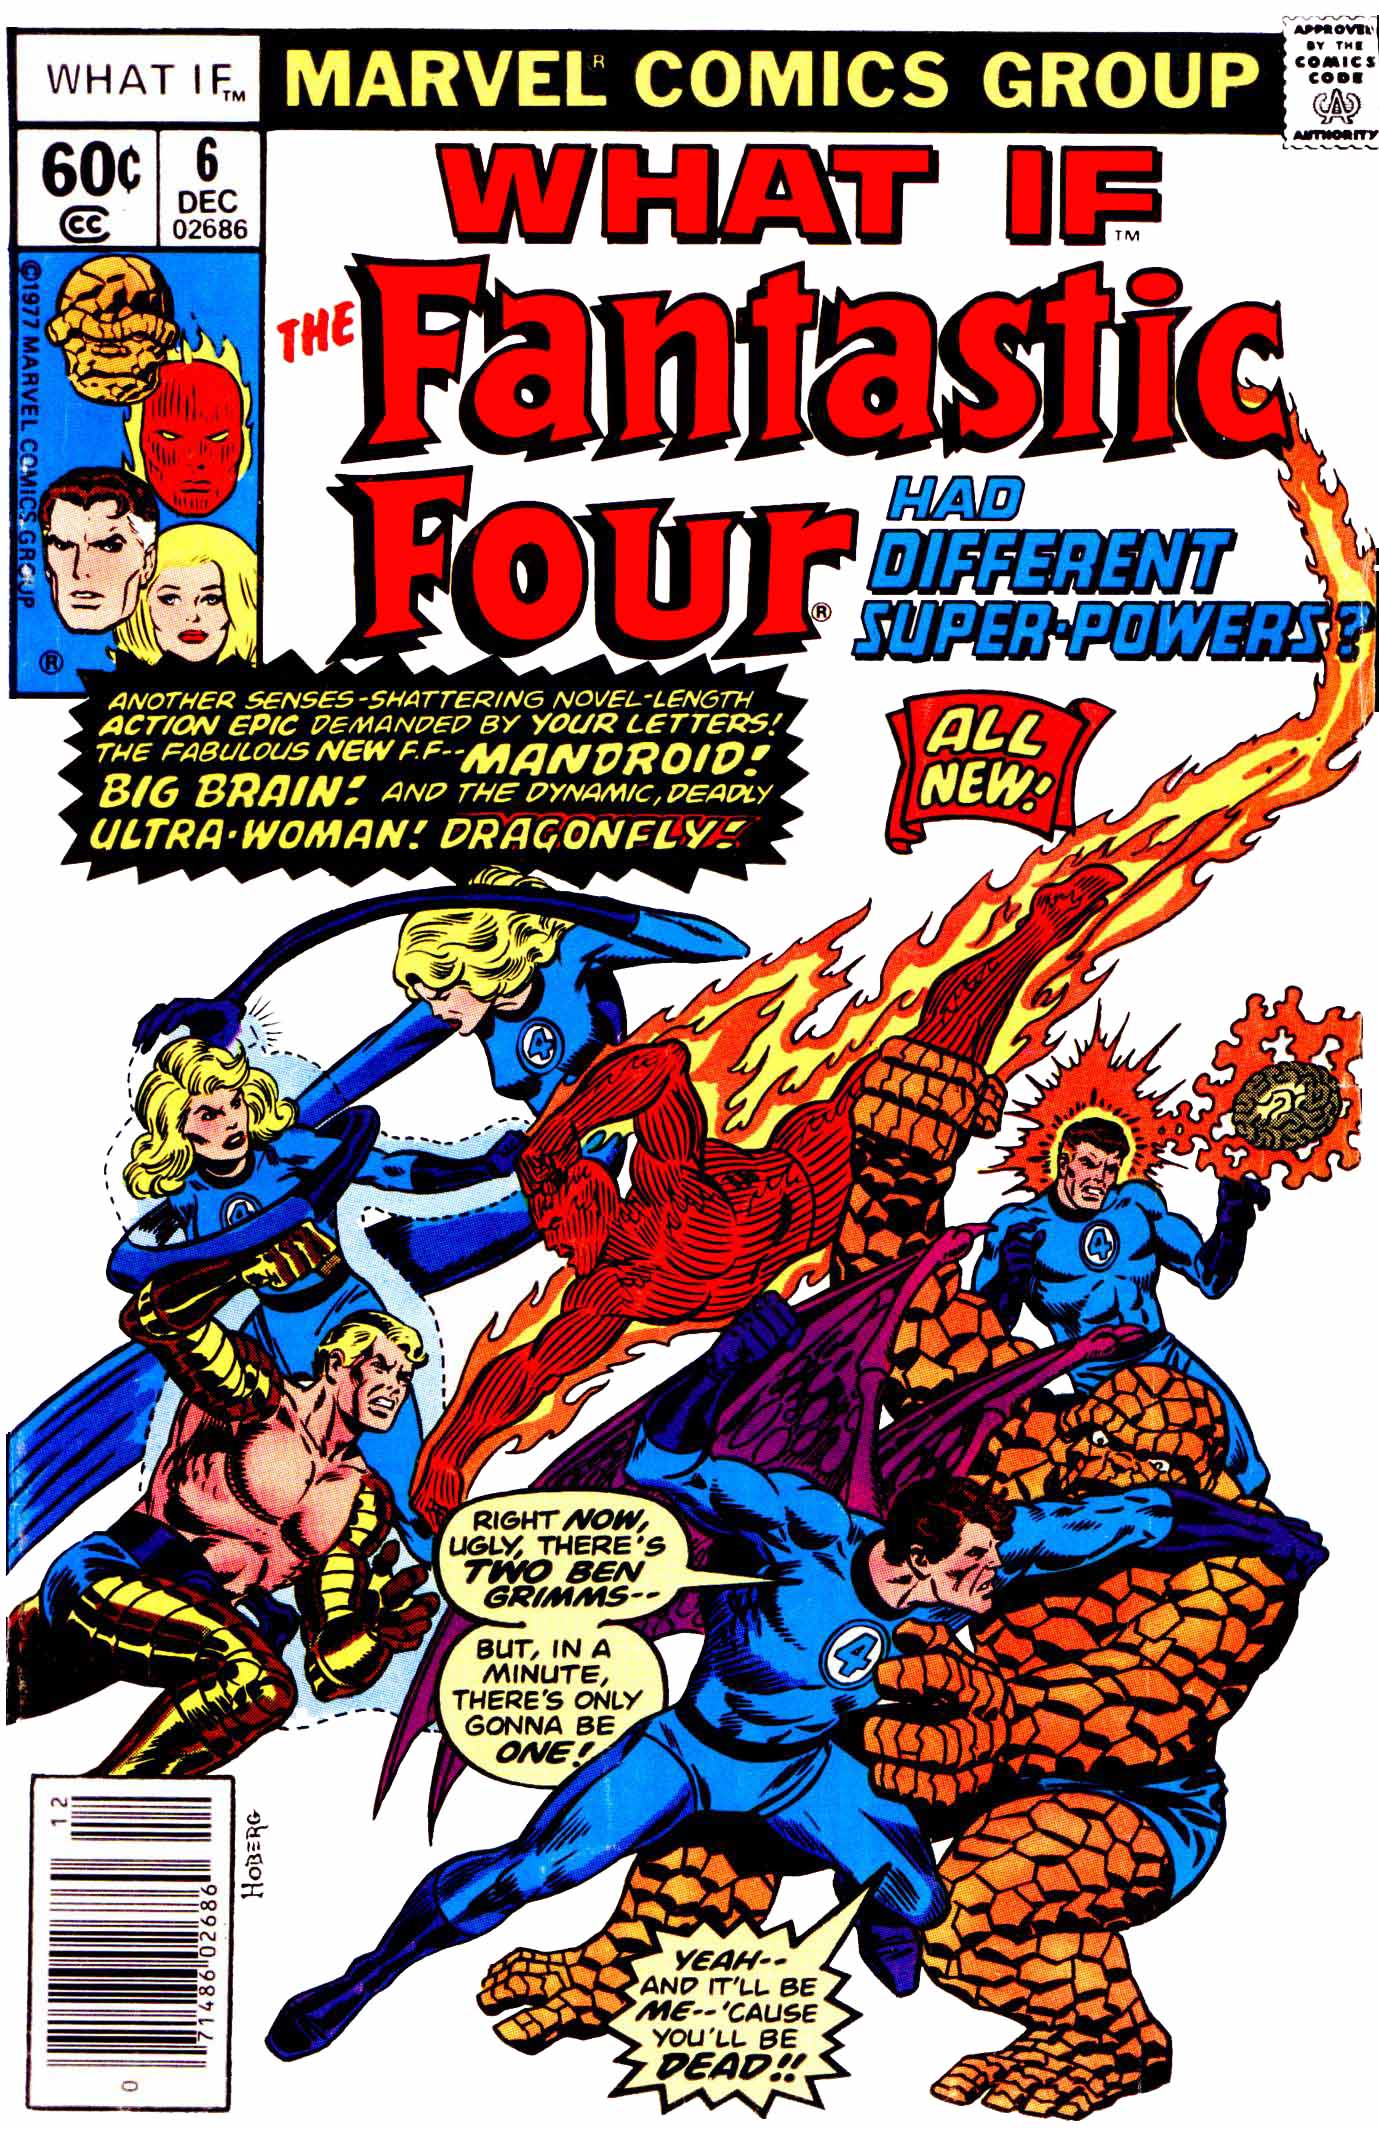 The Fantastic Four Had Different Super Pow